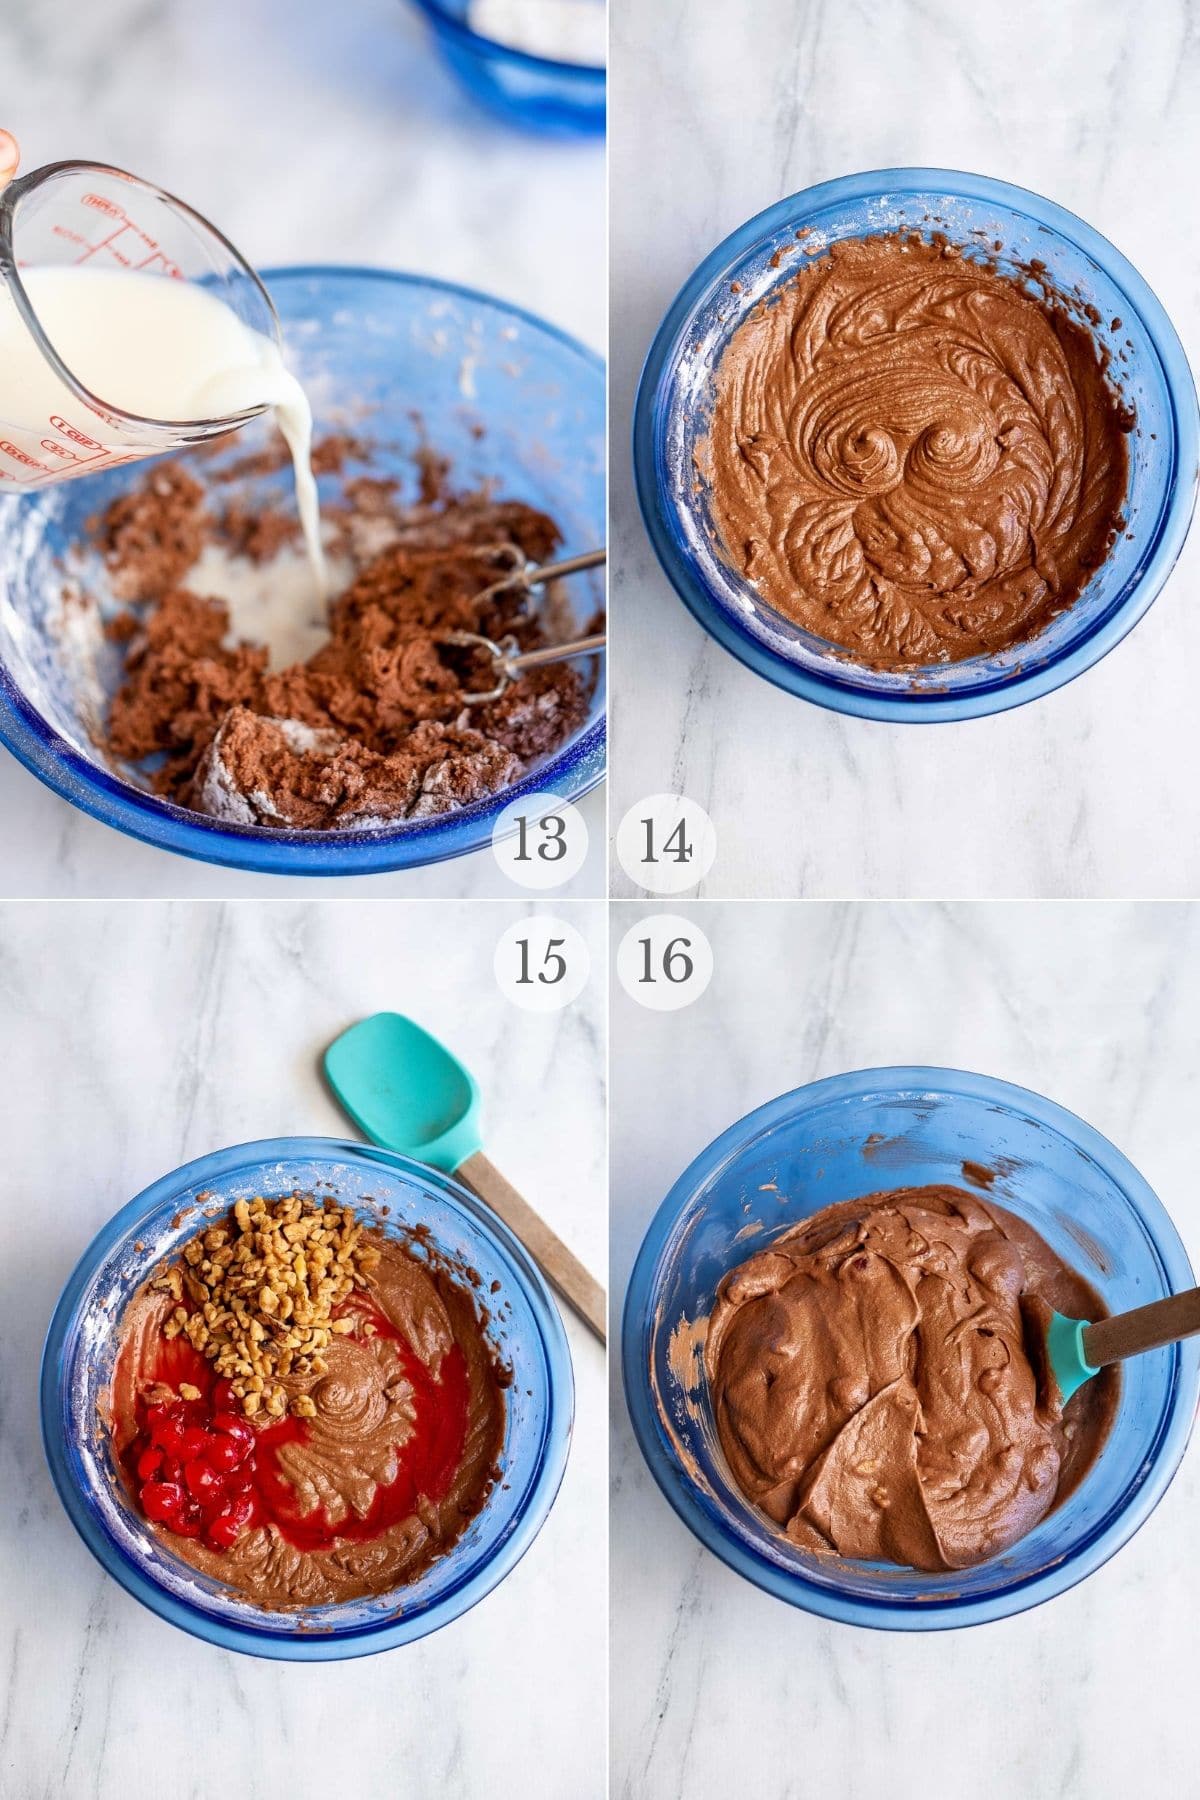 Chocolate Cherry Cake recipe steps 13-16